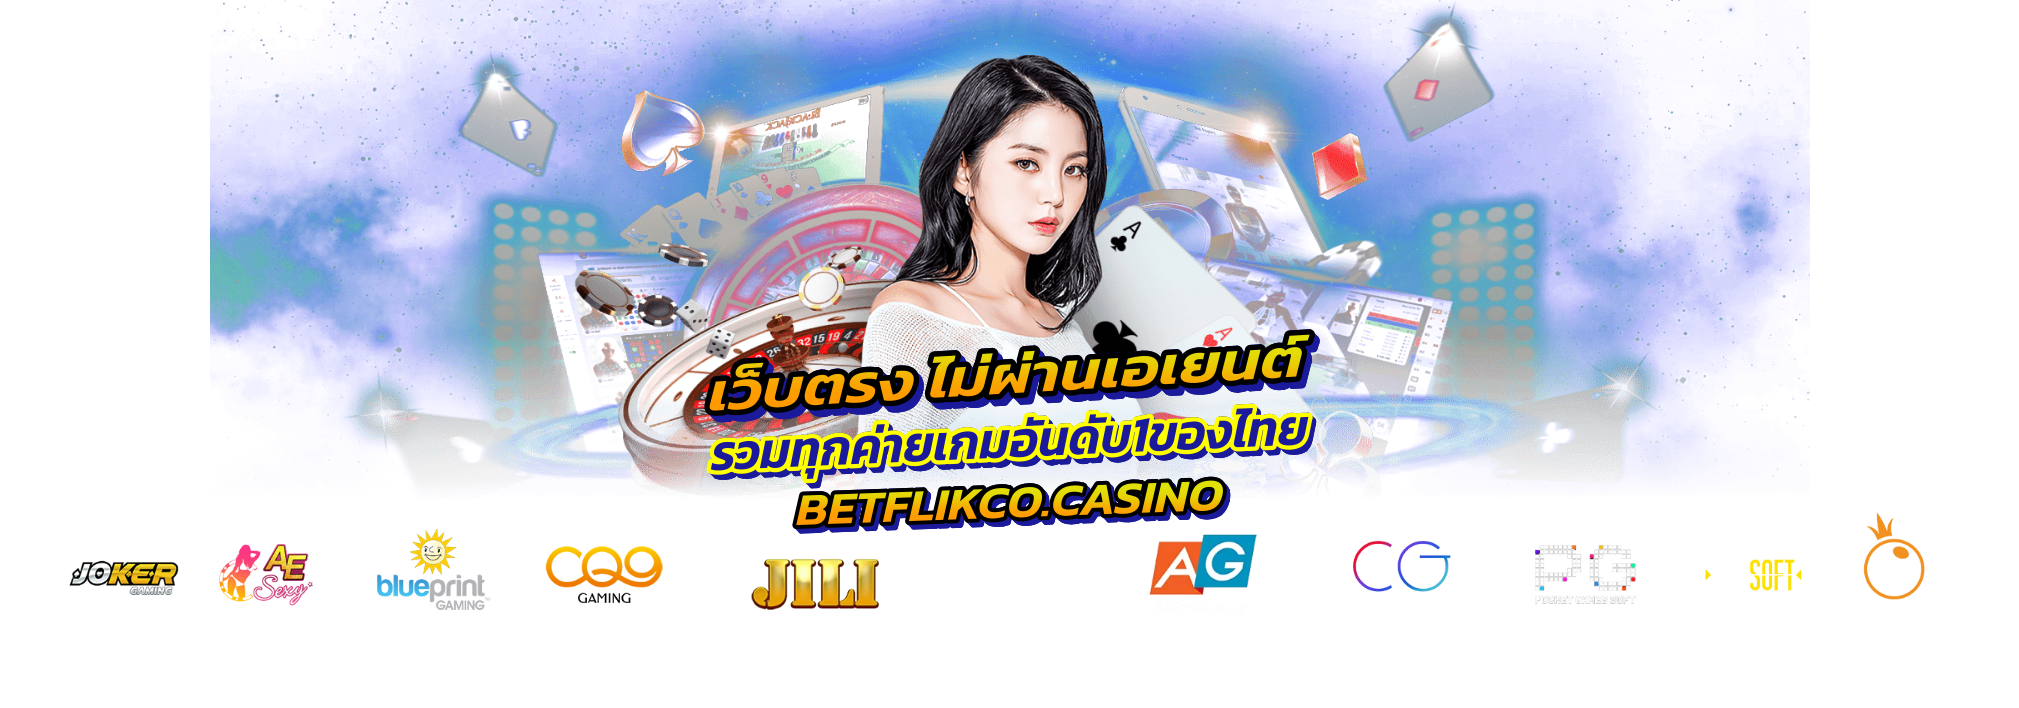 BETFLIKCO เว็บคาสิโนอันดับ1ในไทย